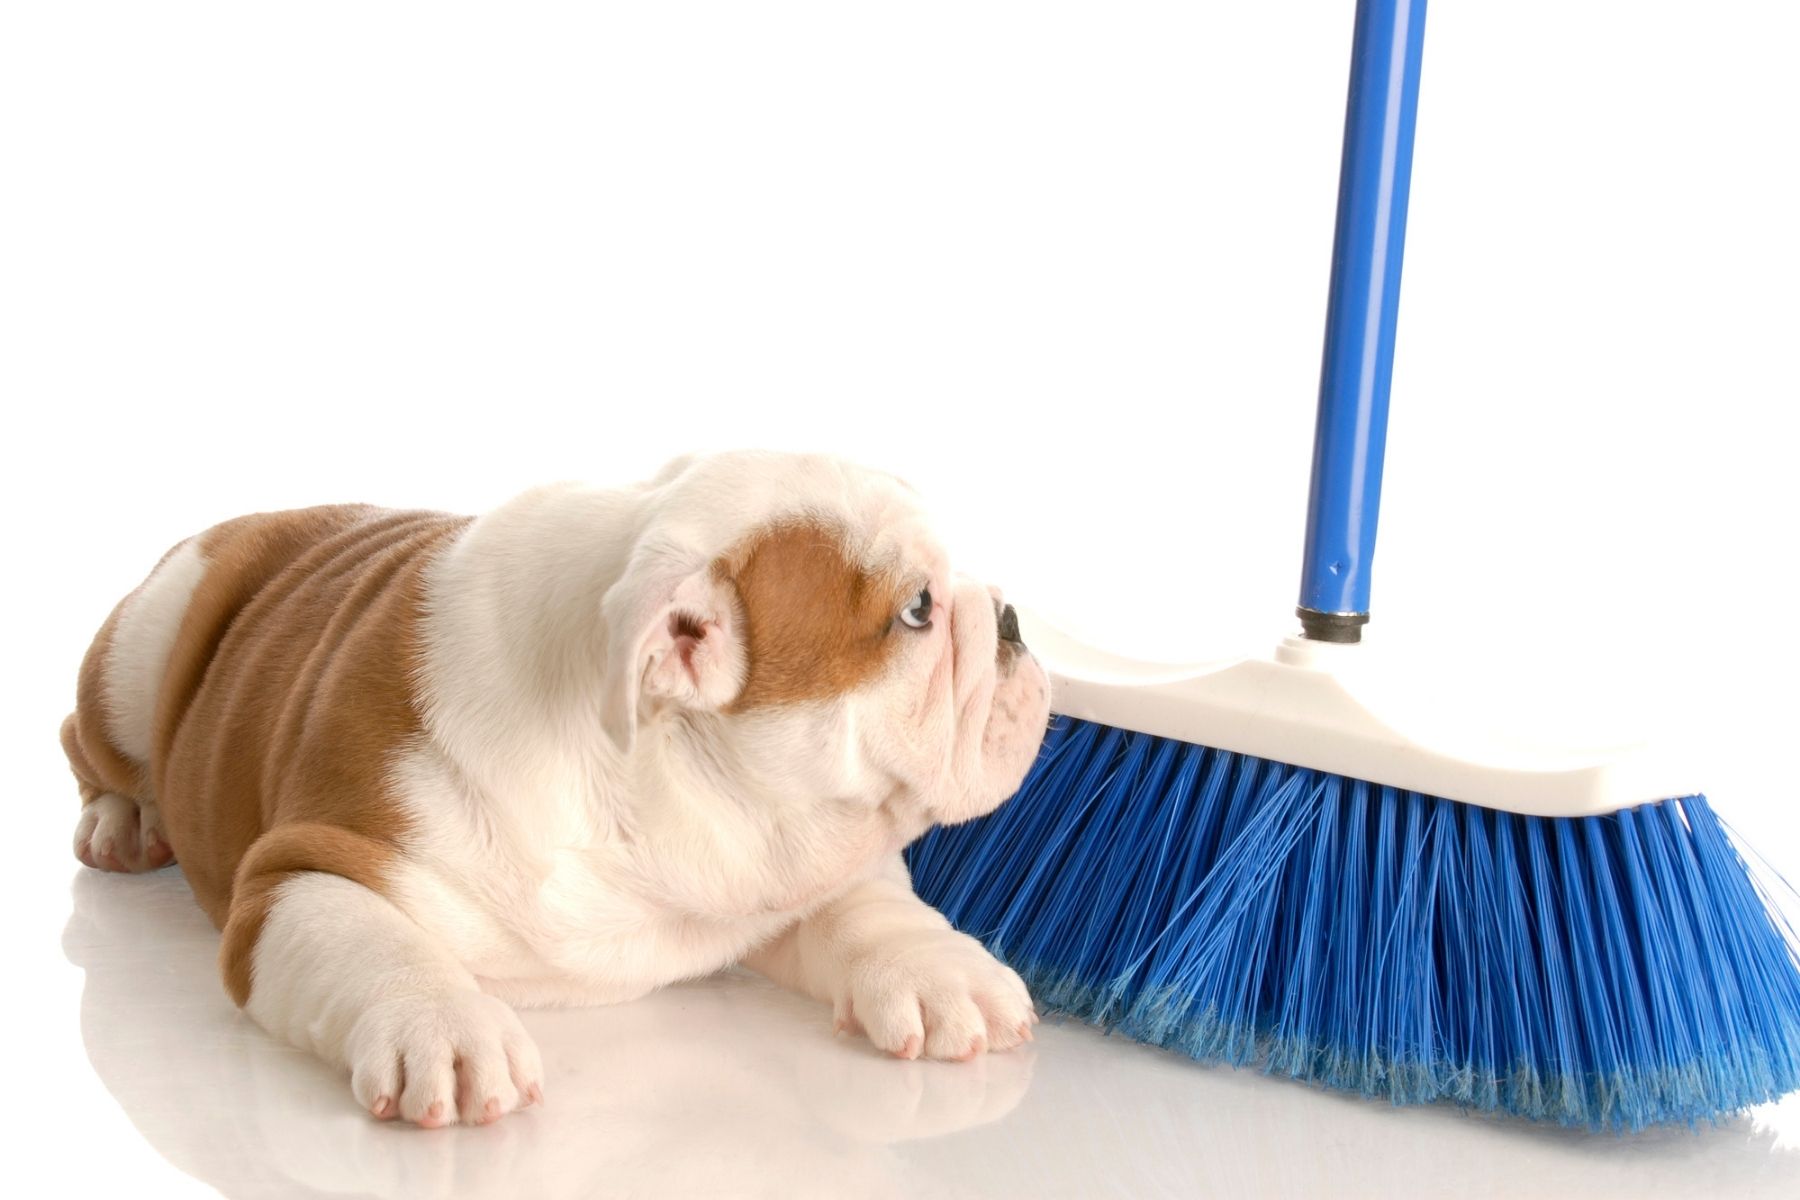 English bulldog scared of a blue broom